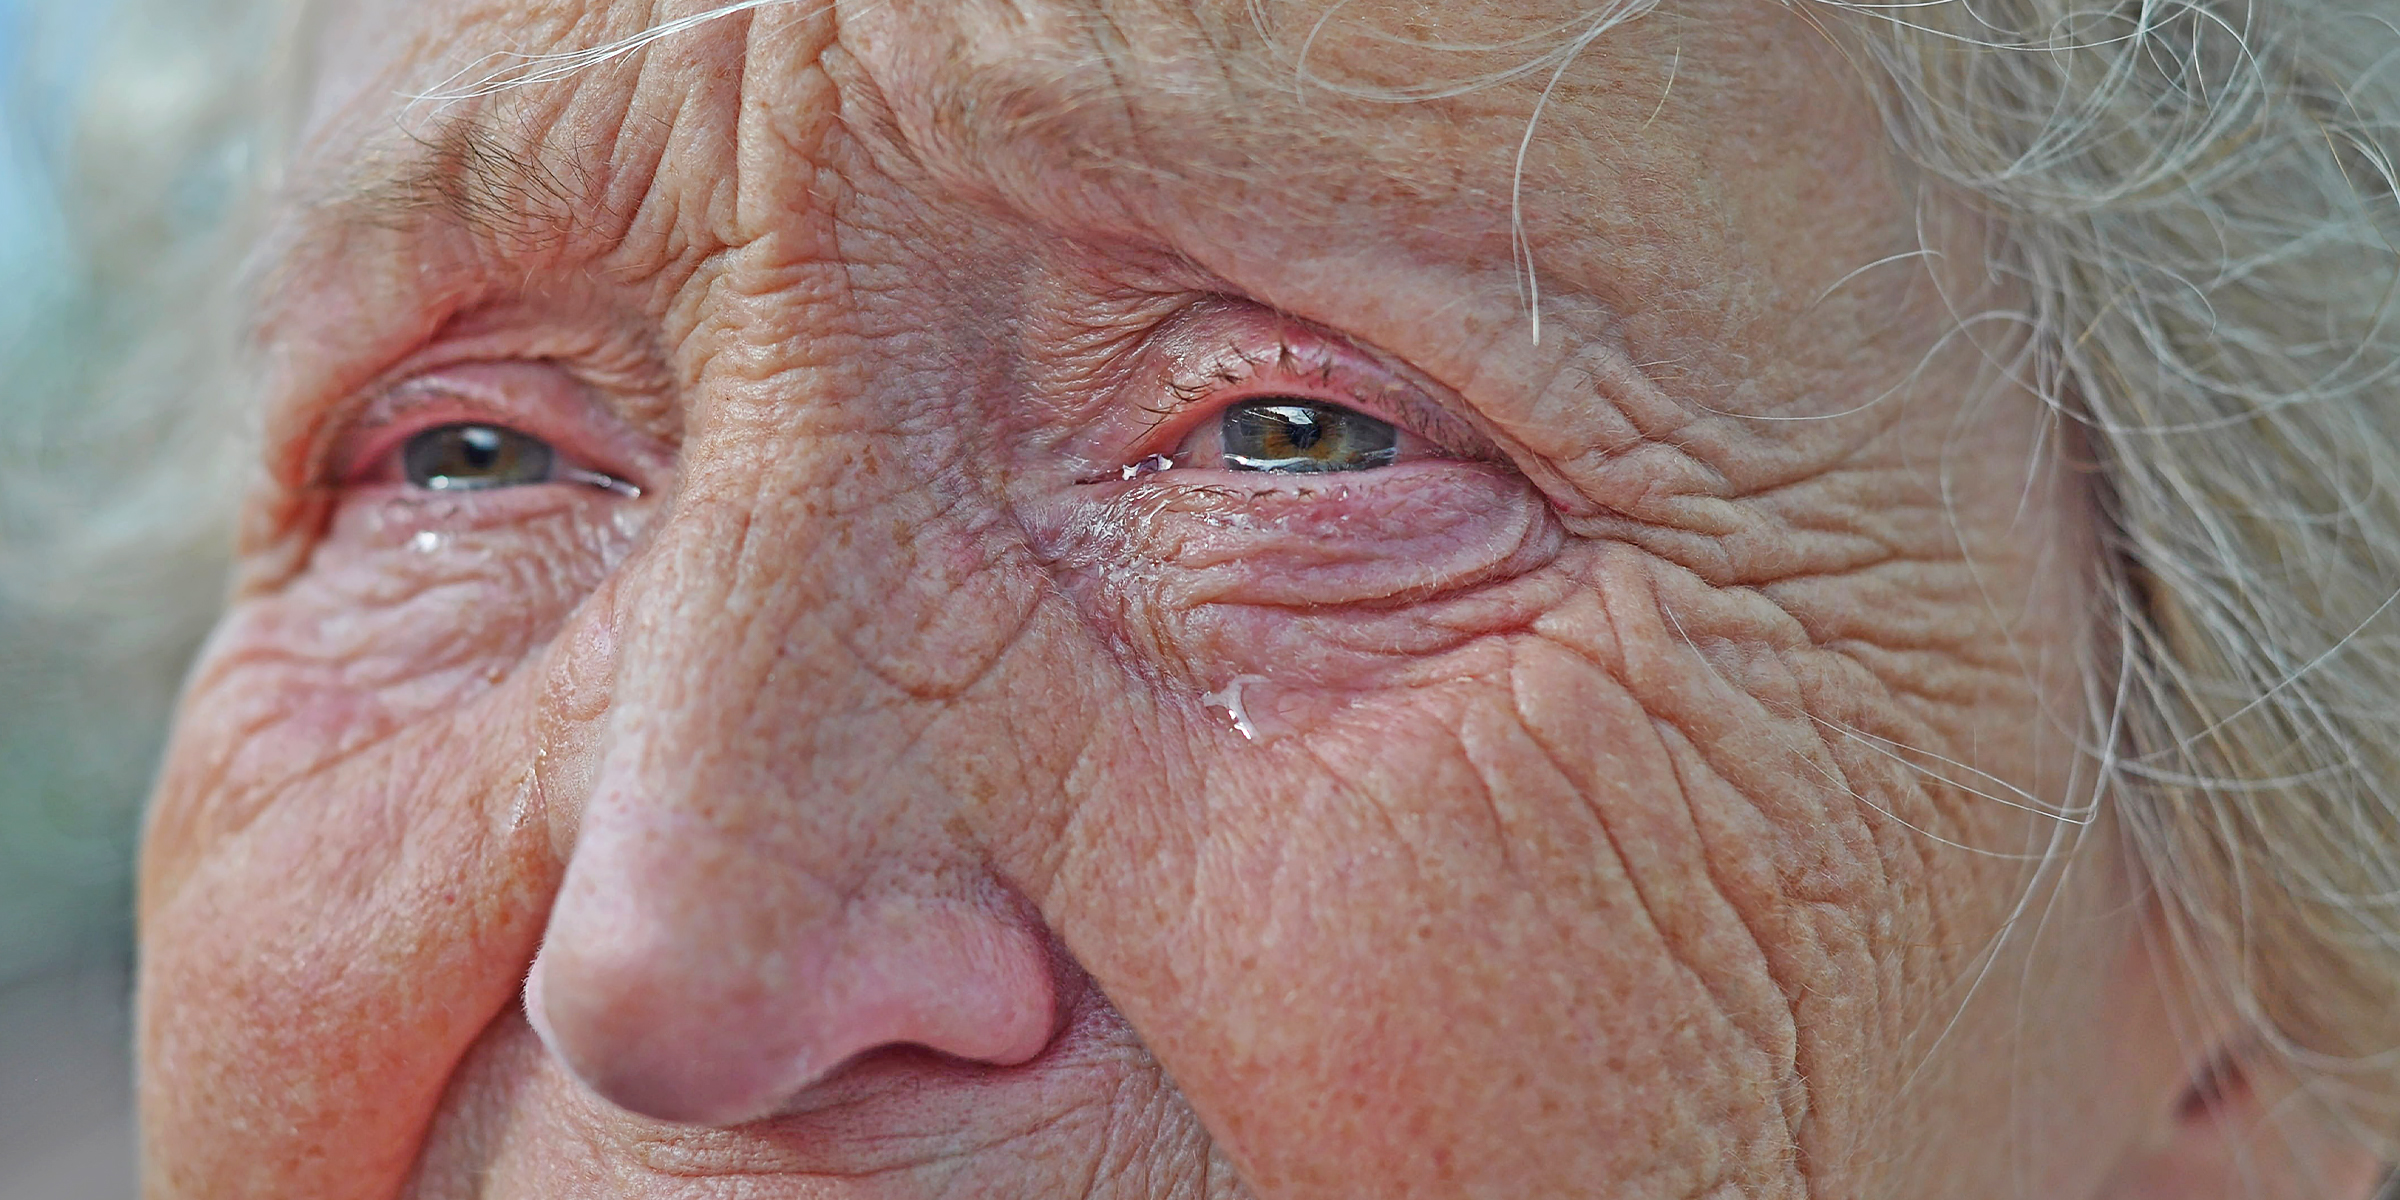 Une dame âgée en pleurs | Source : Shutterstock